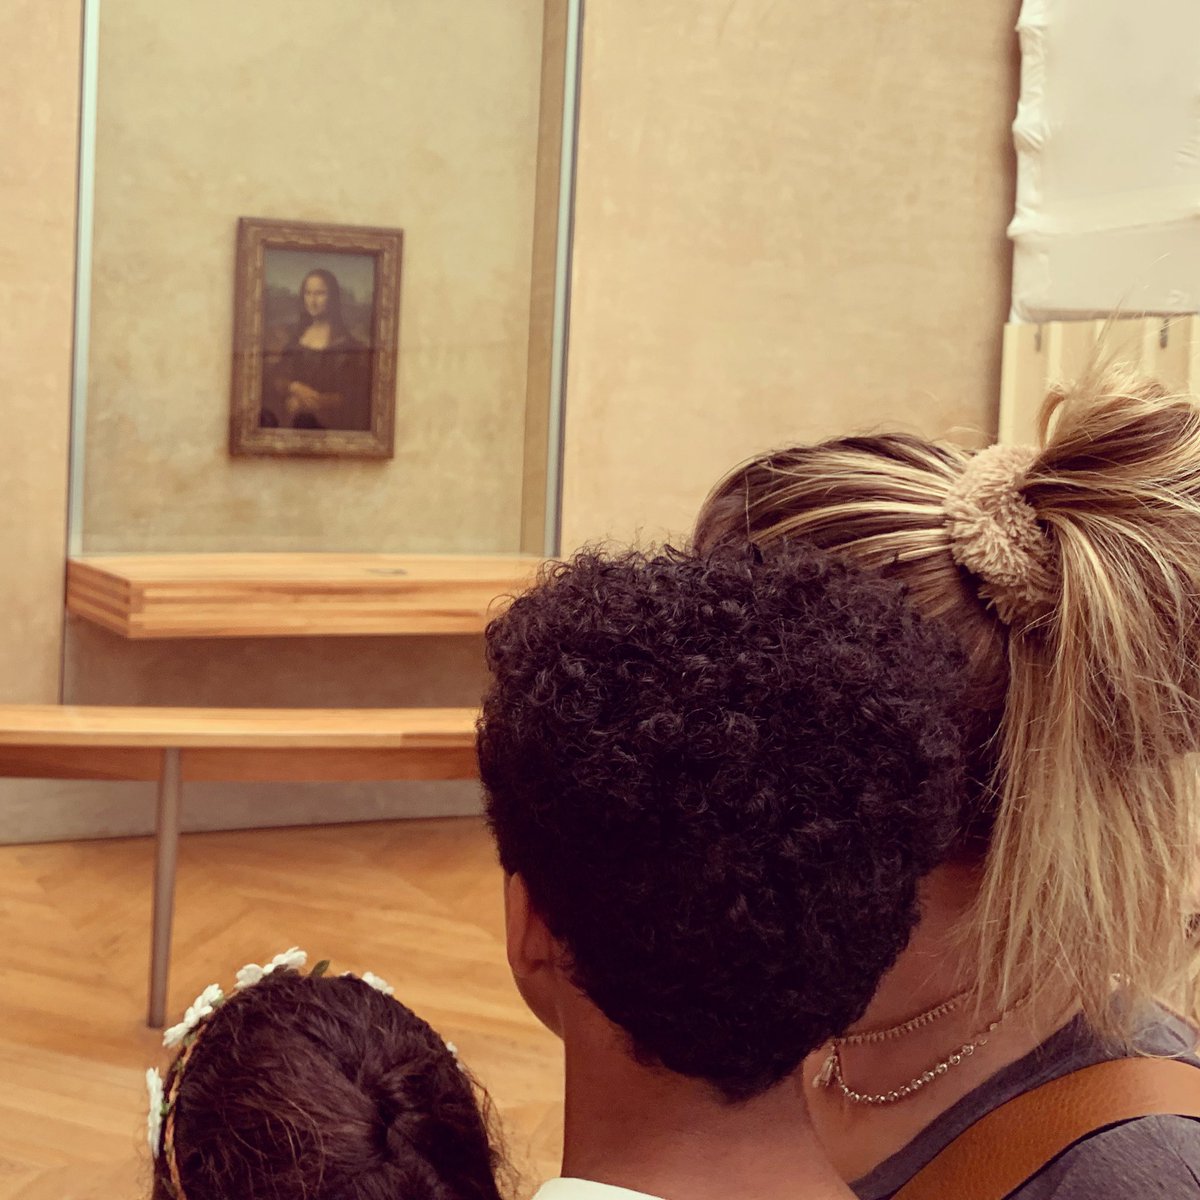 The Mona Lisa 
 #Louvre #MonaLisa https://t.co/hAuU5LfcgZ